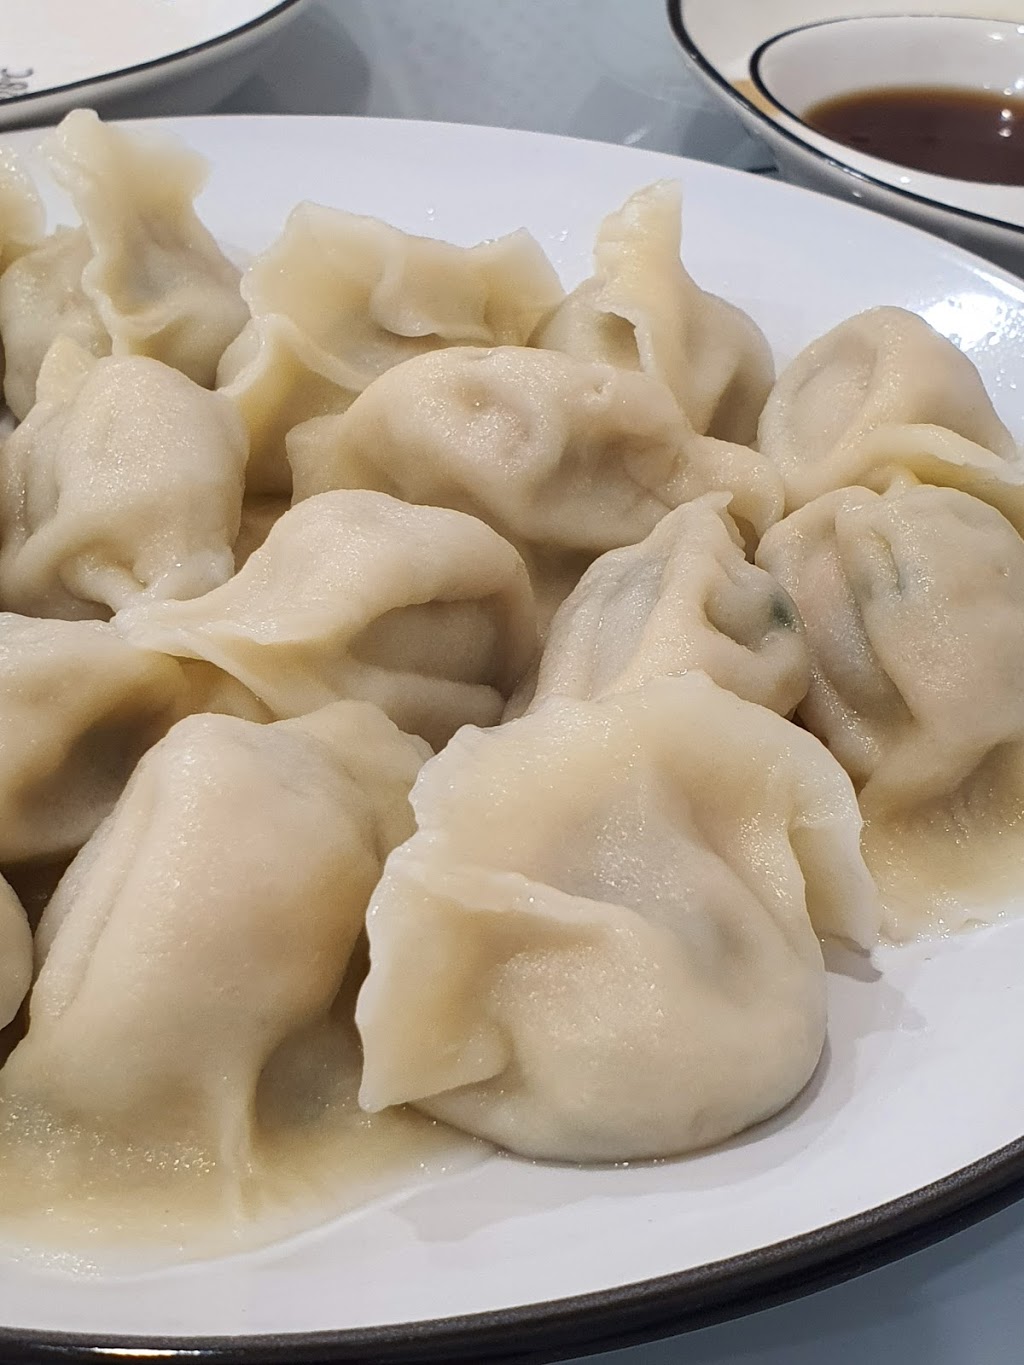 Dumplings China | restaurant | Morotai Ave, Riverwood NSW 2210, Australia